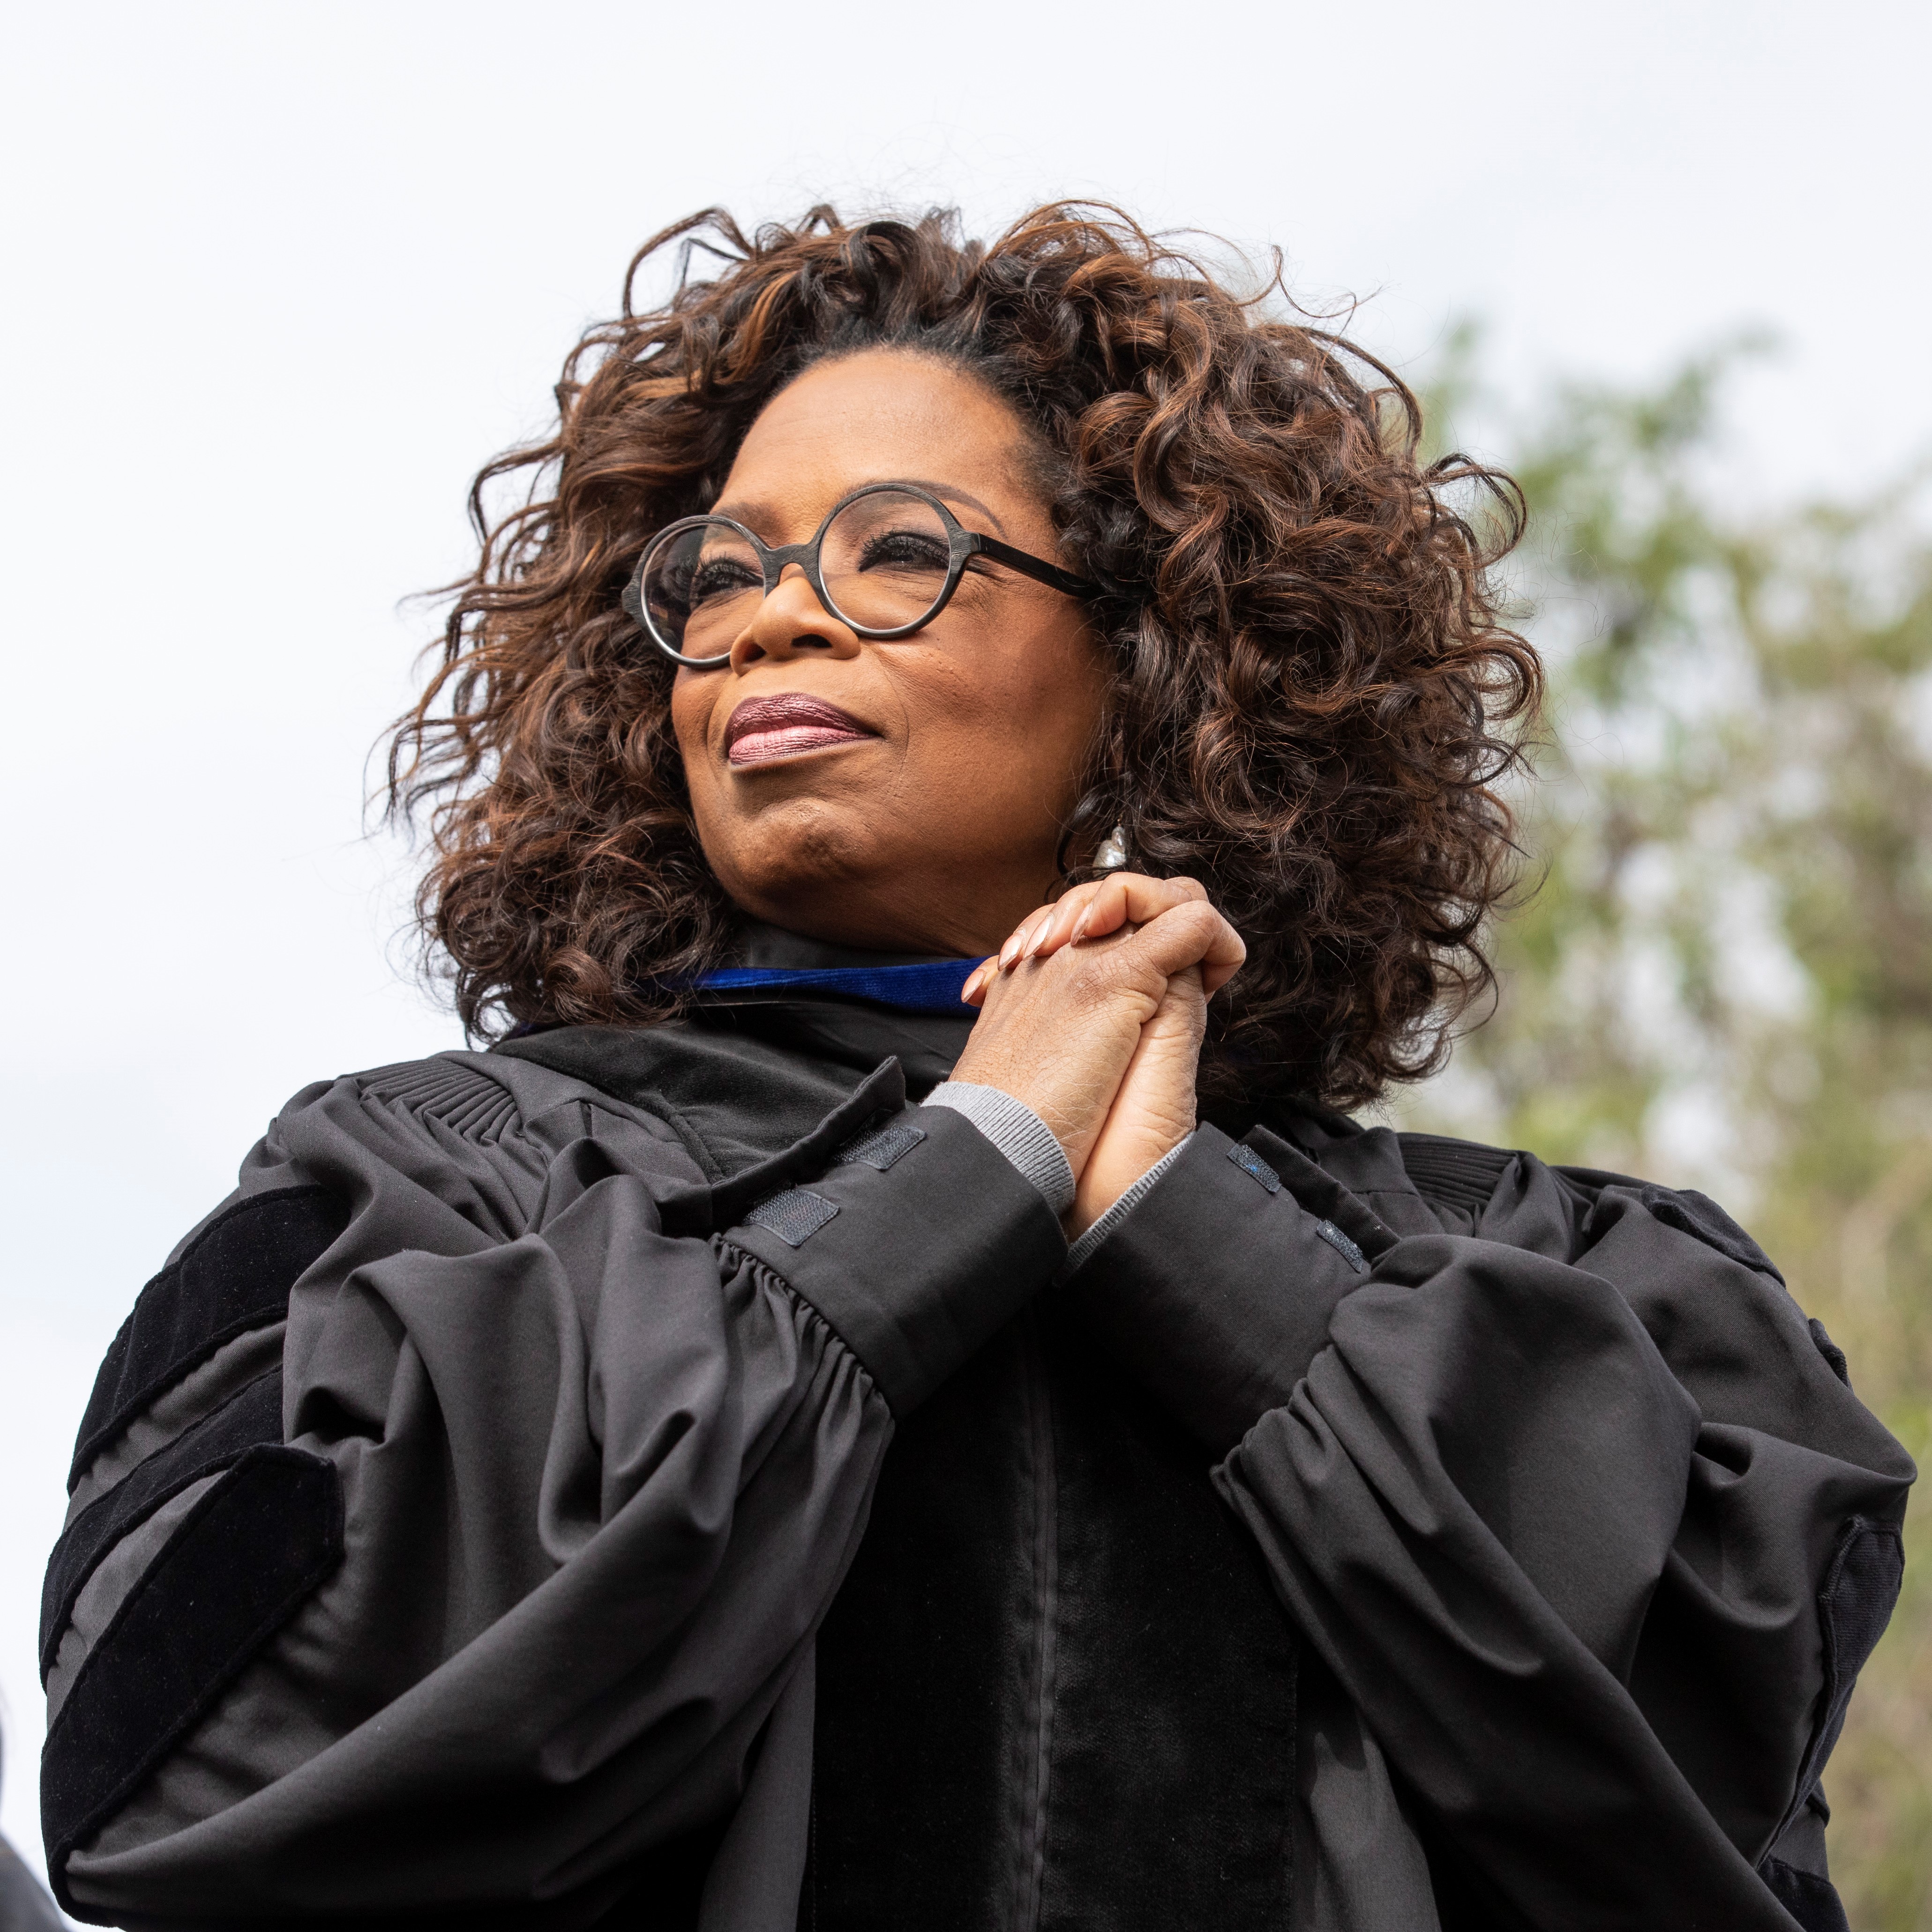 'Use Your Life in Service,' Oprah Winfrey Tells Graduates